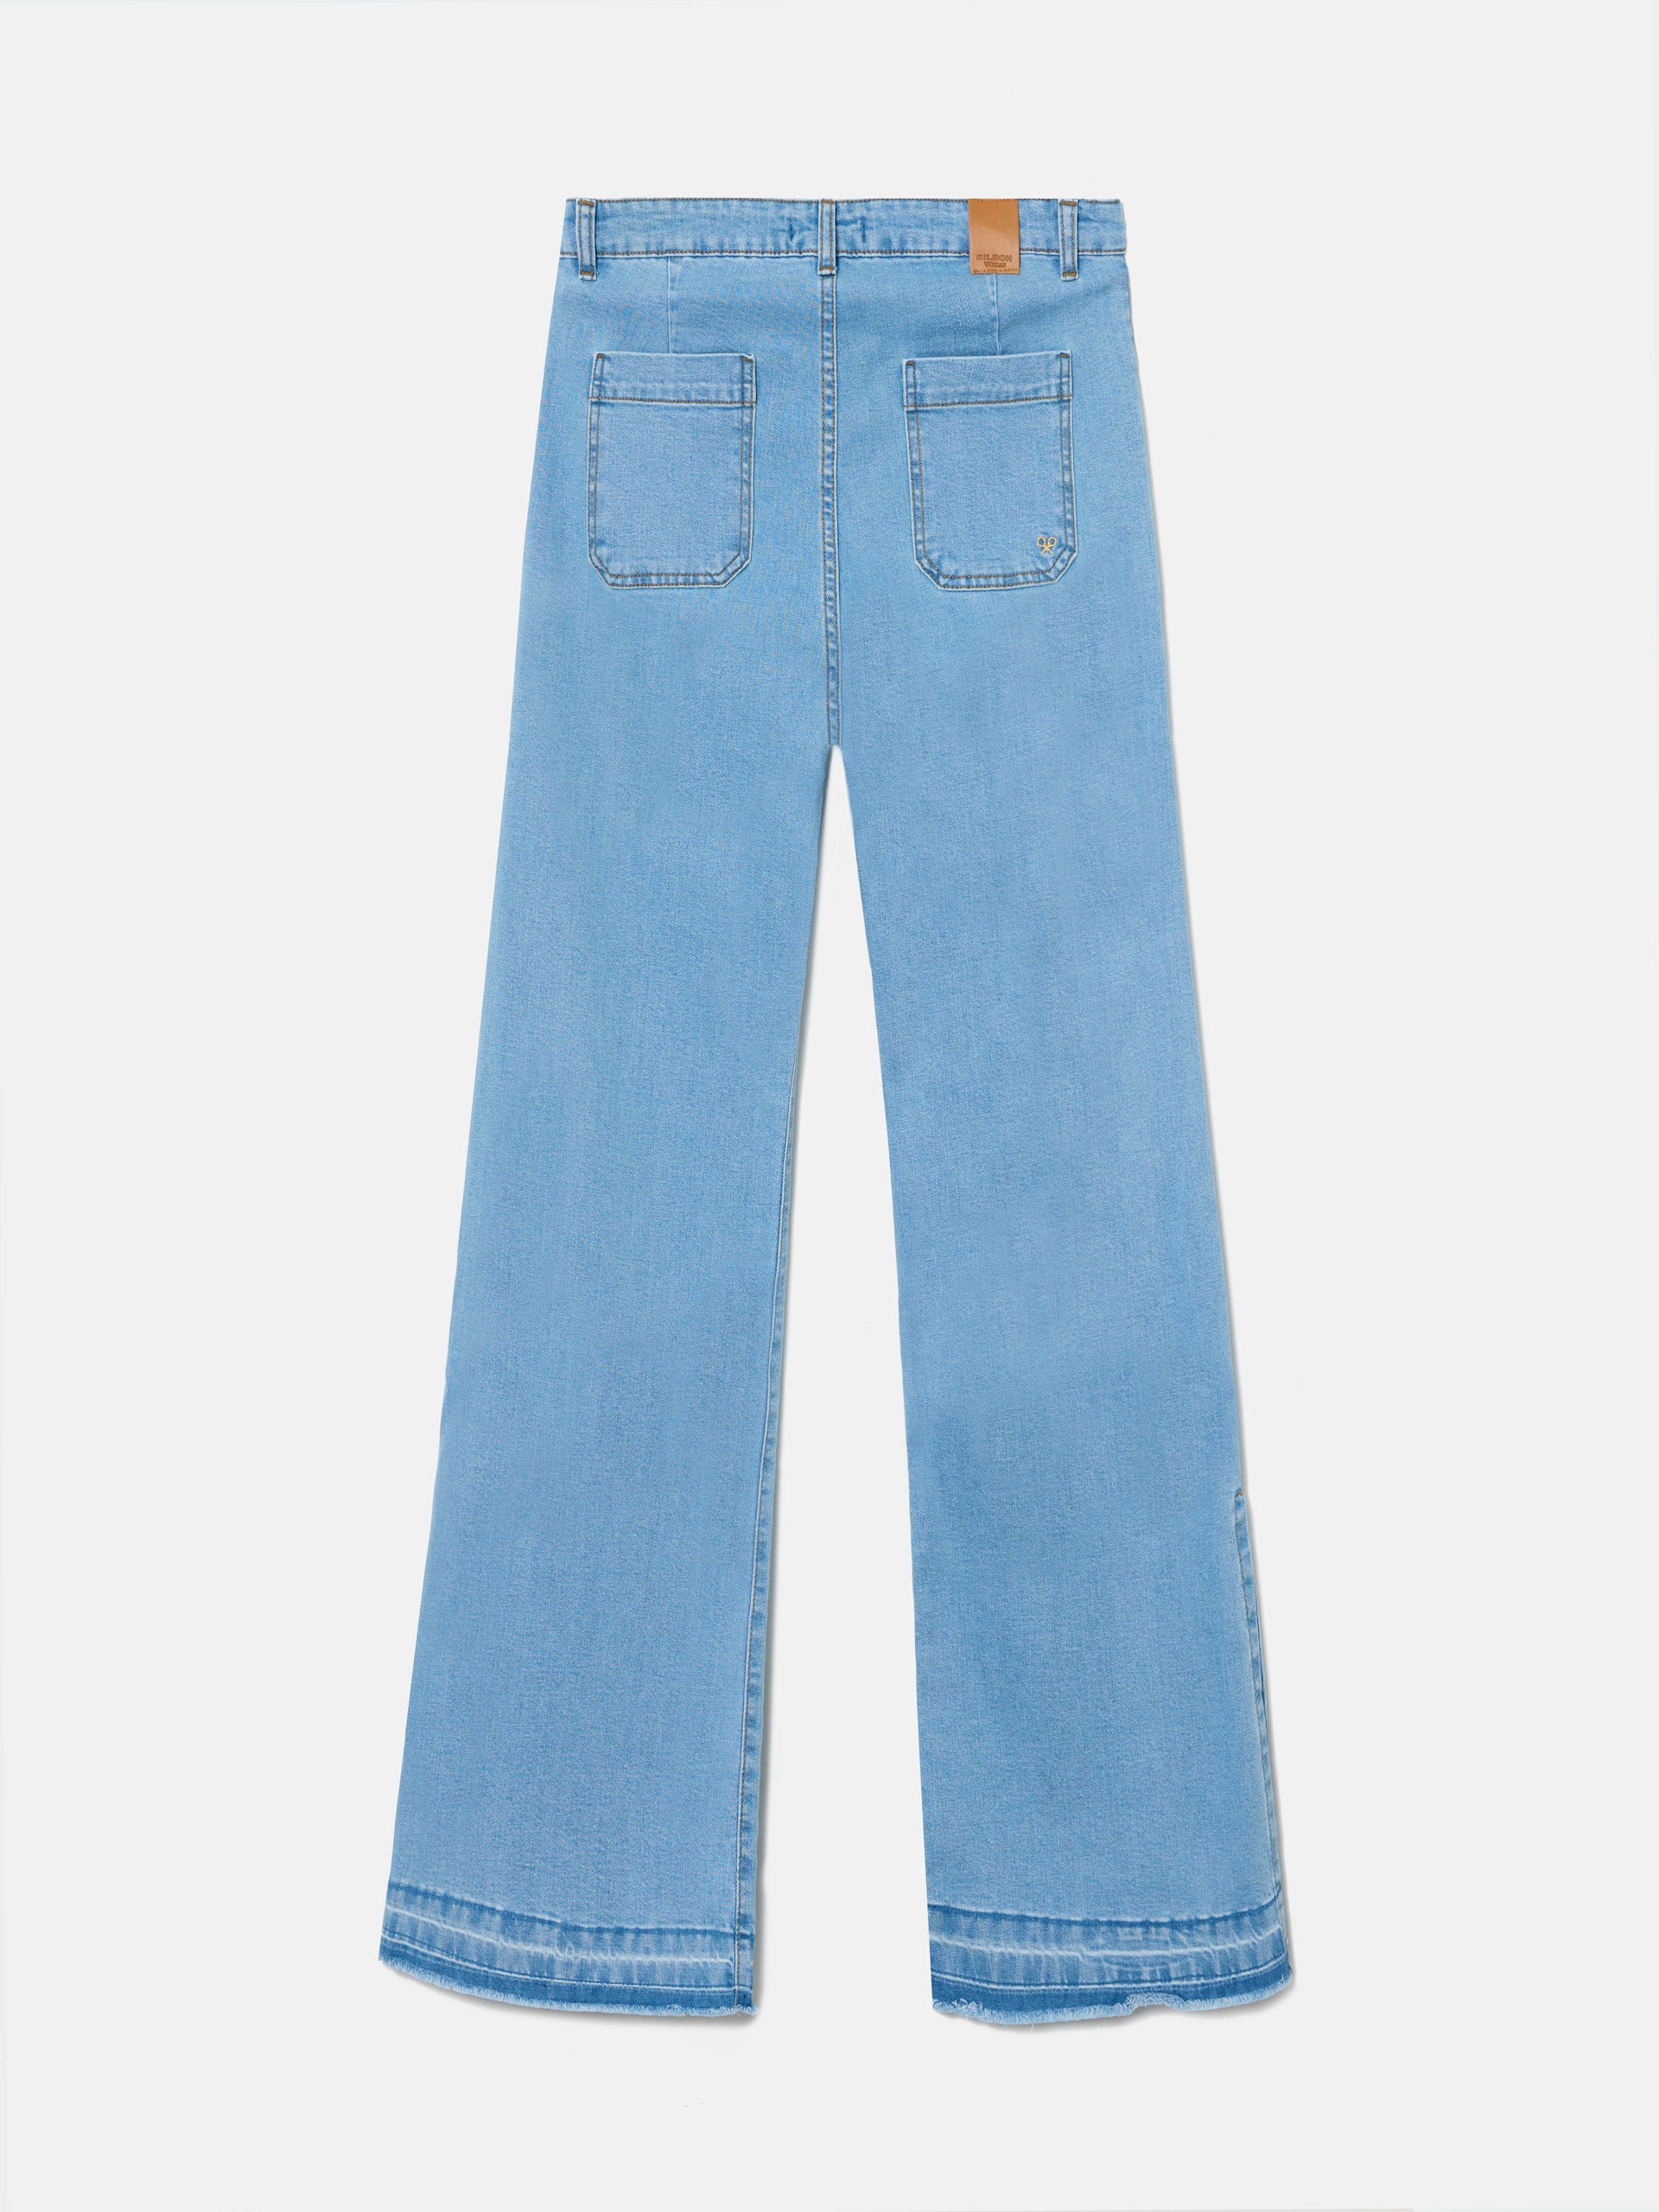 Pantalon culotte bolsillos azul marino